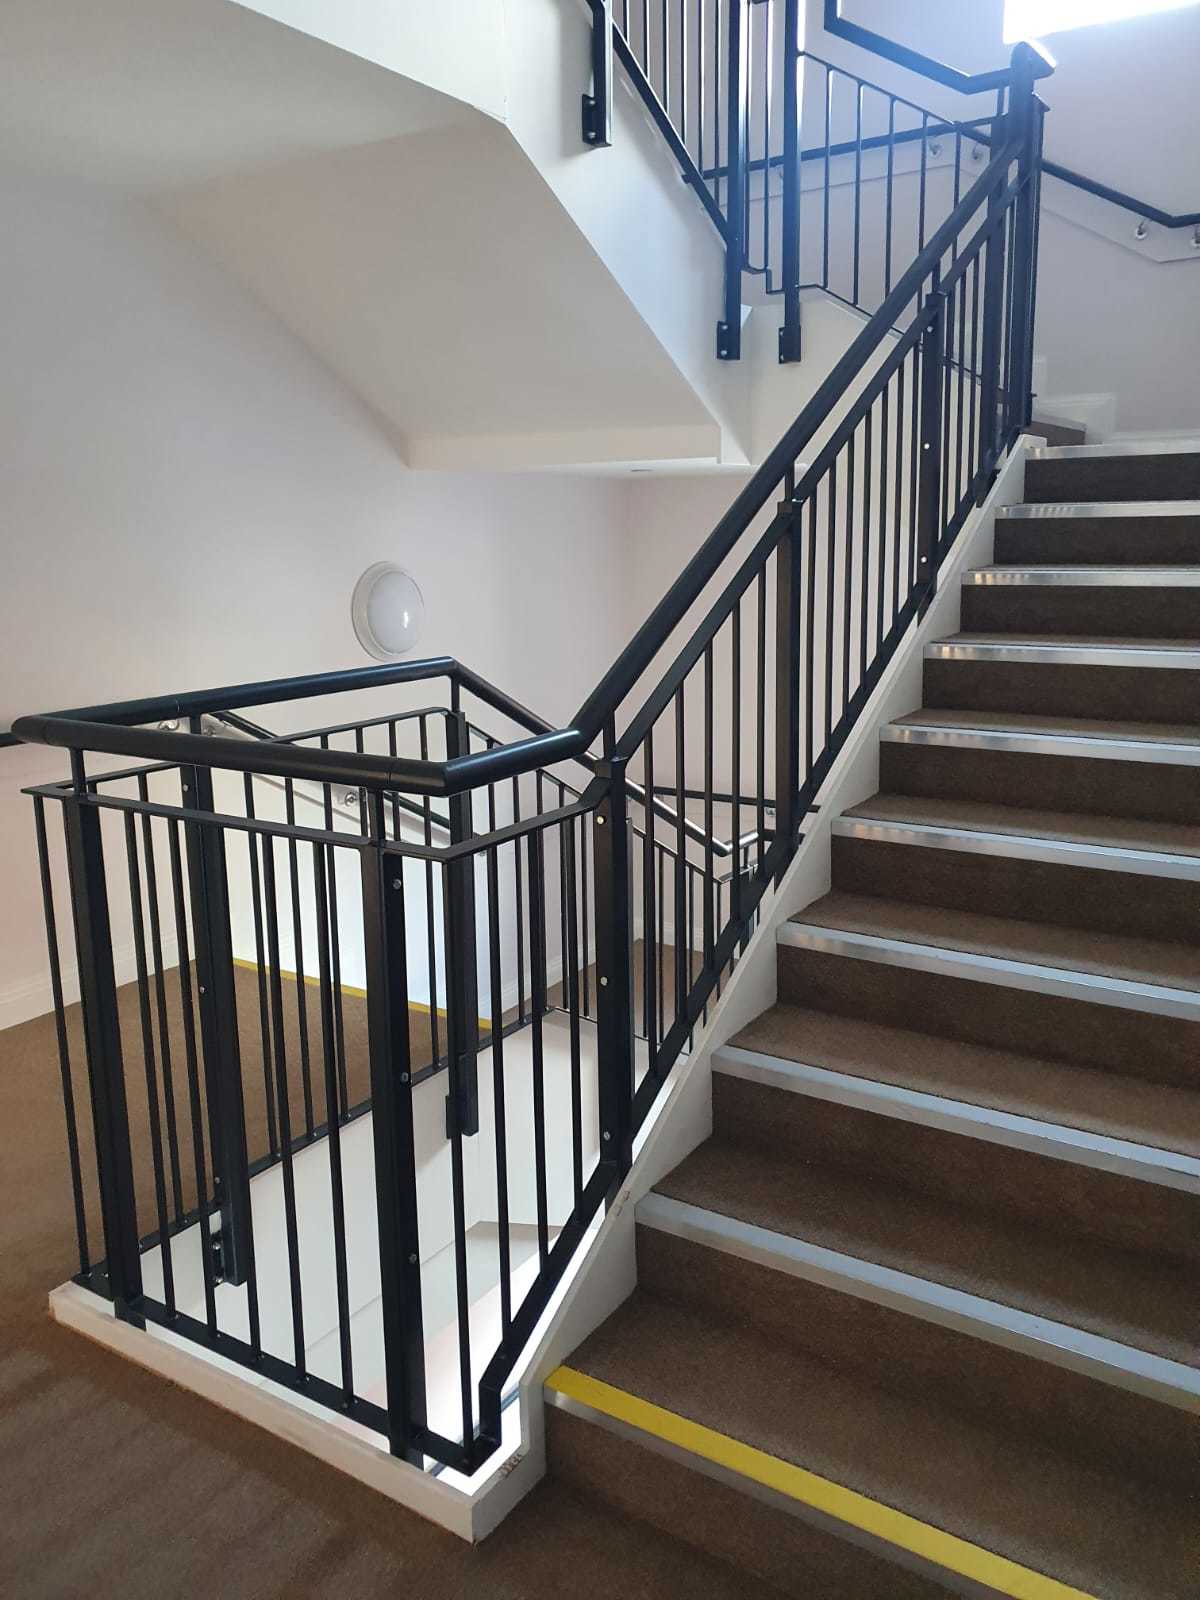 Mild Steel Vertical Bar Stair Balustrade with a Circular Handrail